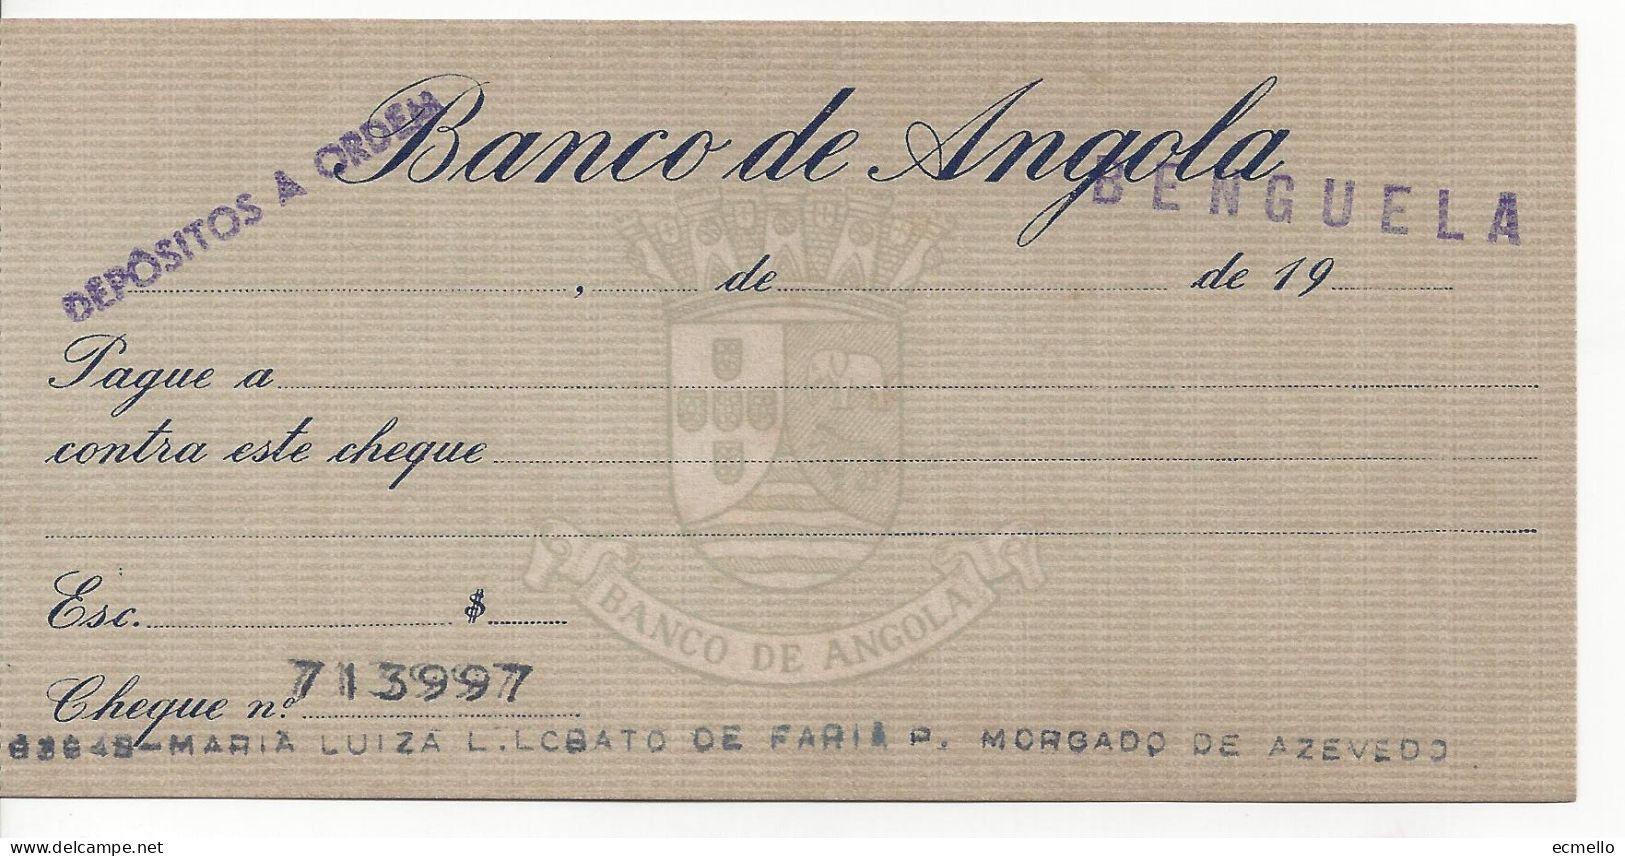 PORTUGAL ANGOLA CHEQUE CHECK BANCO DE ANGOLA, BENGUELA, 1950'S SCARCE - Cheques En Traveller's Cheques